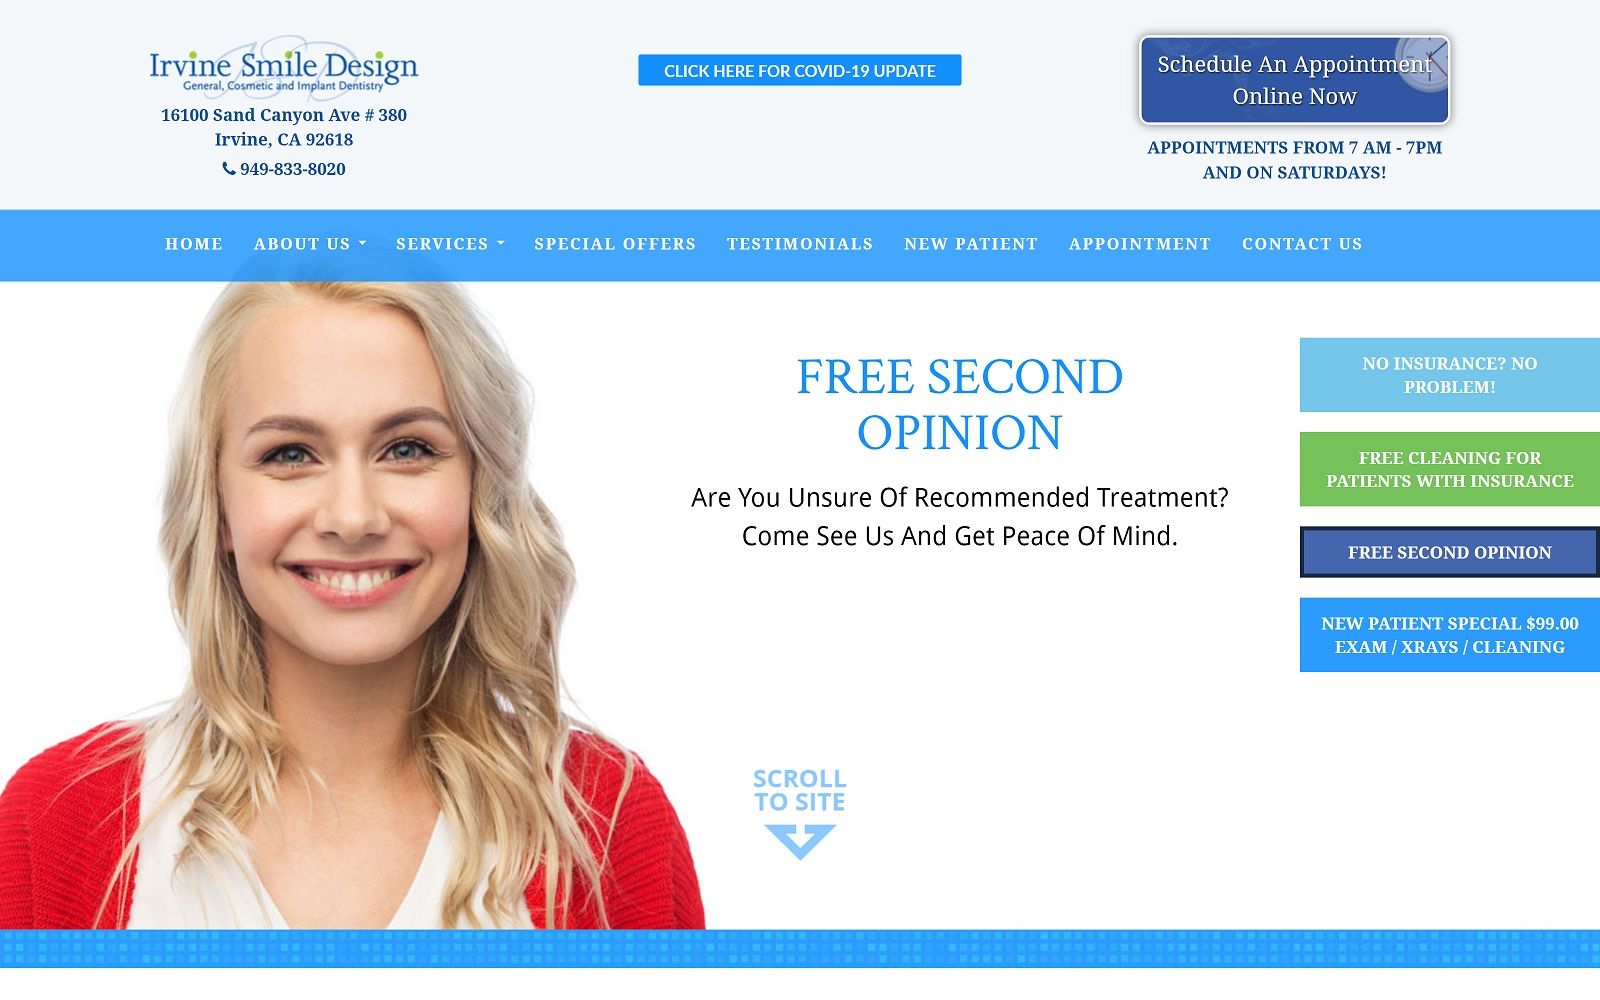 The screenshot of irvine smile design website